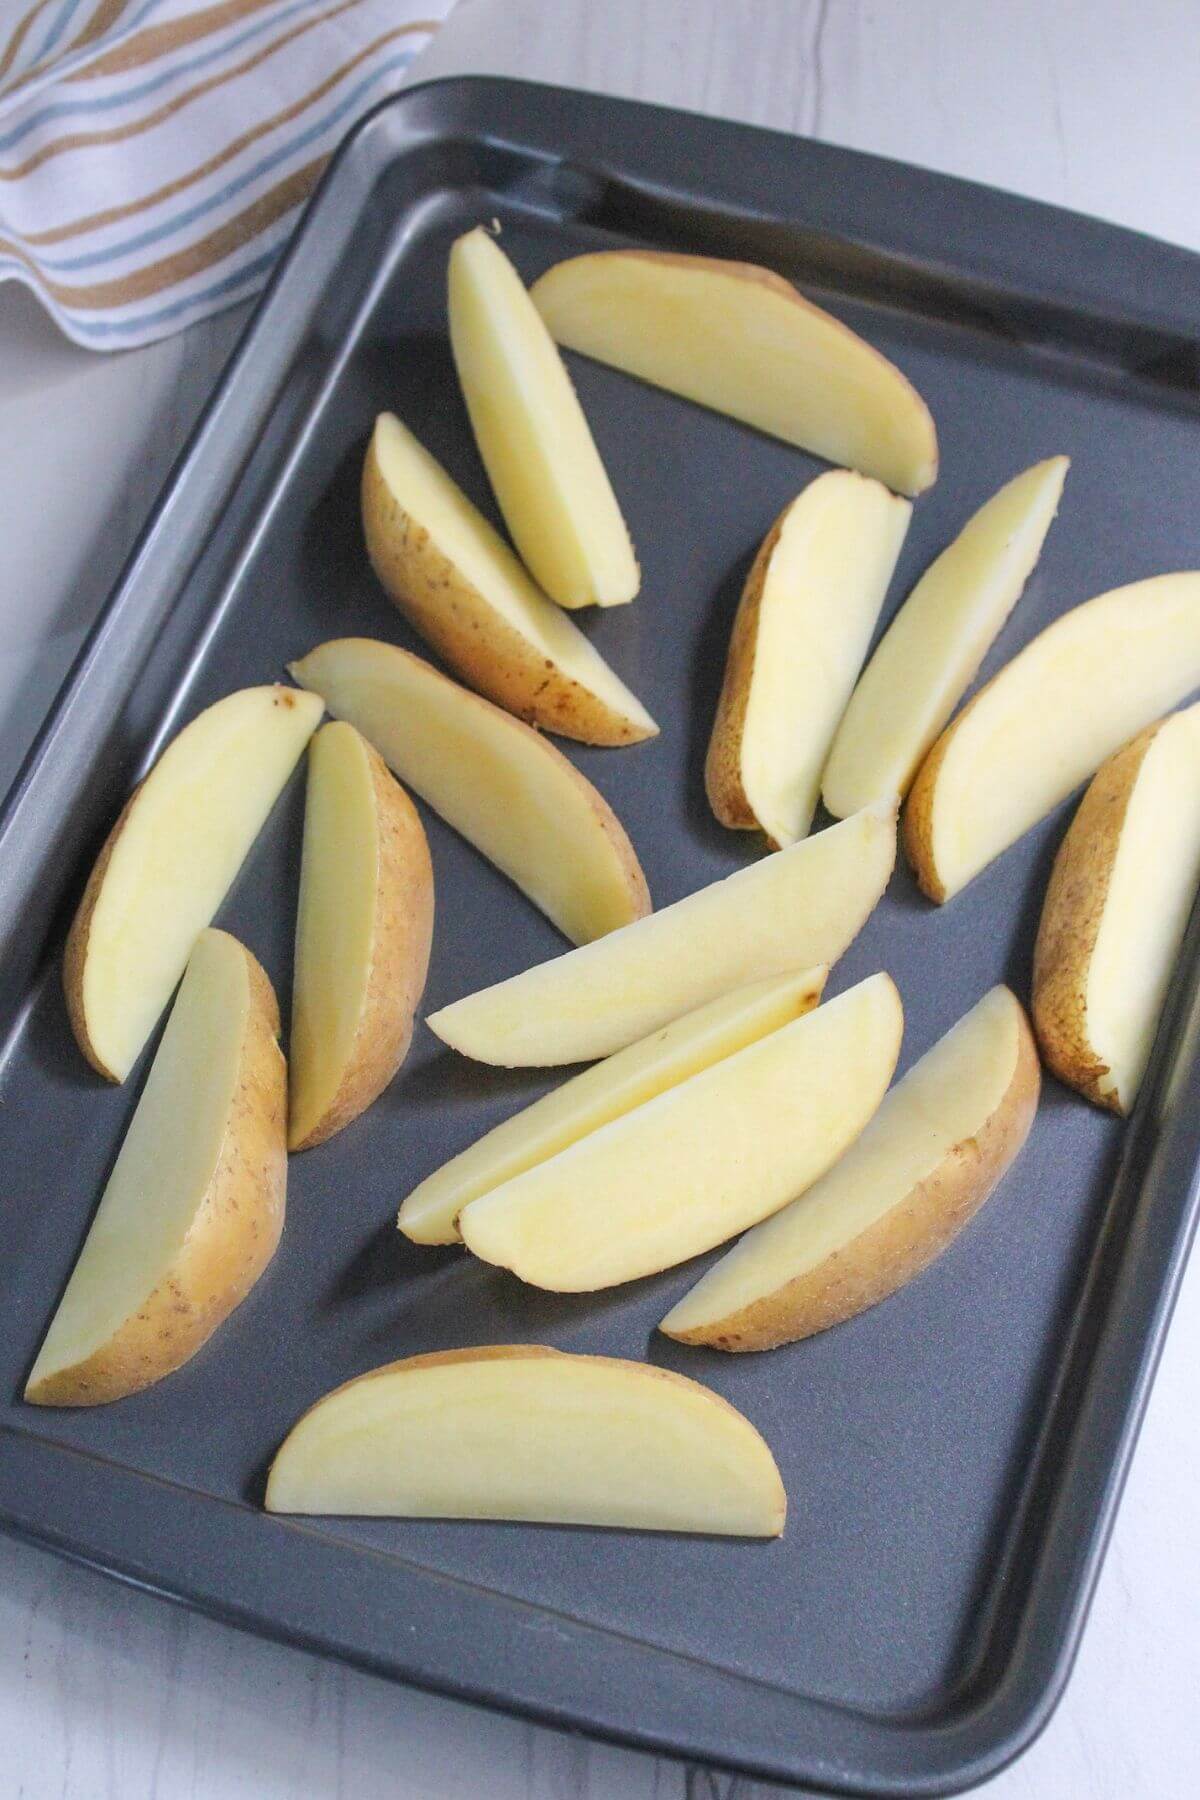 Prepared potato wedges on baking sheet.